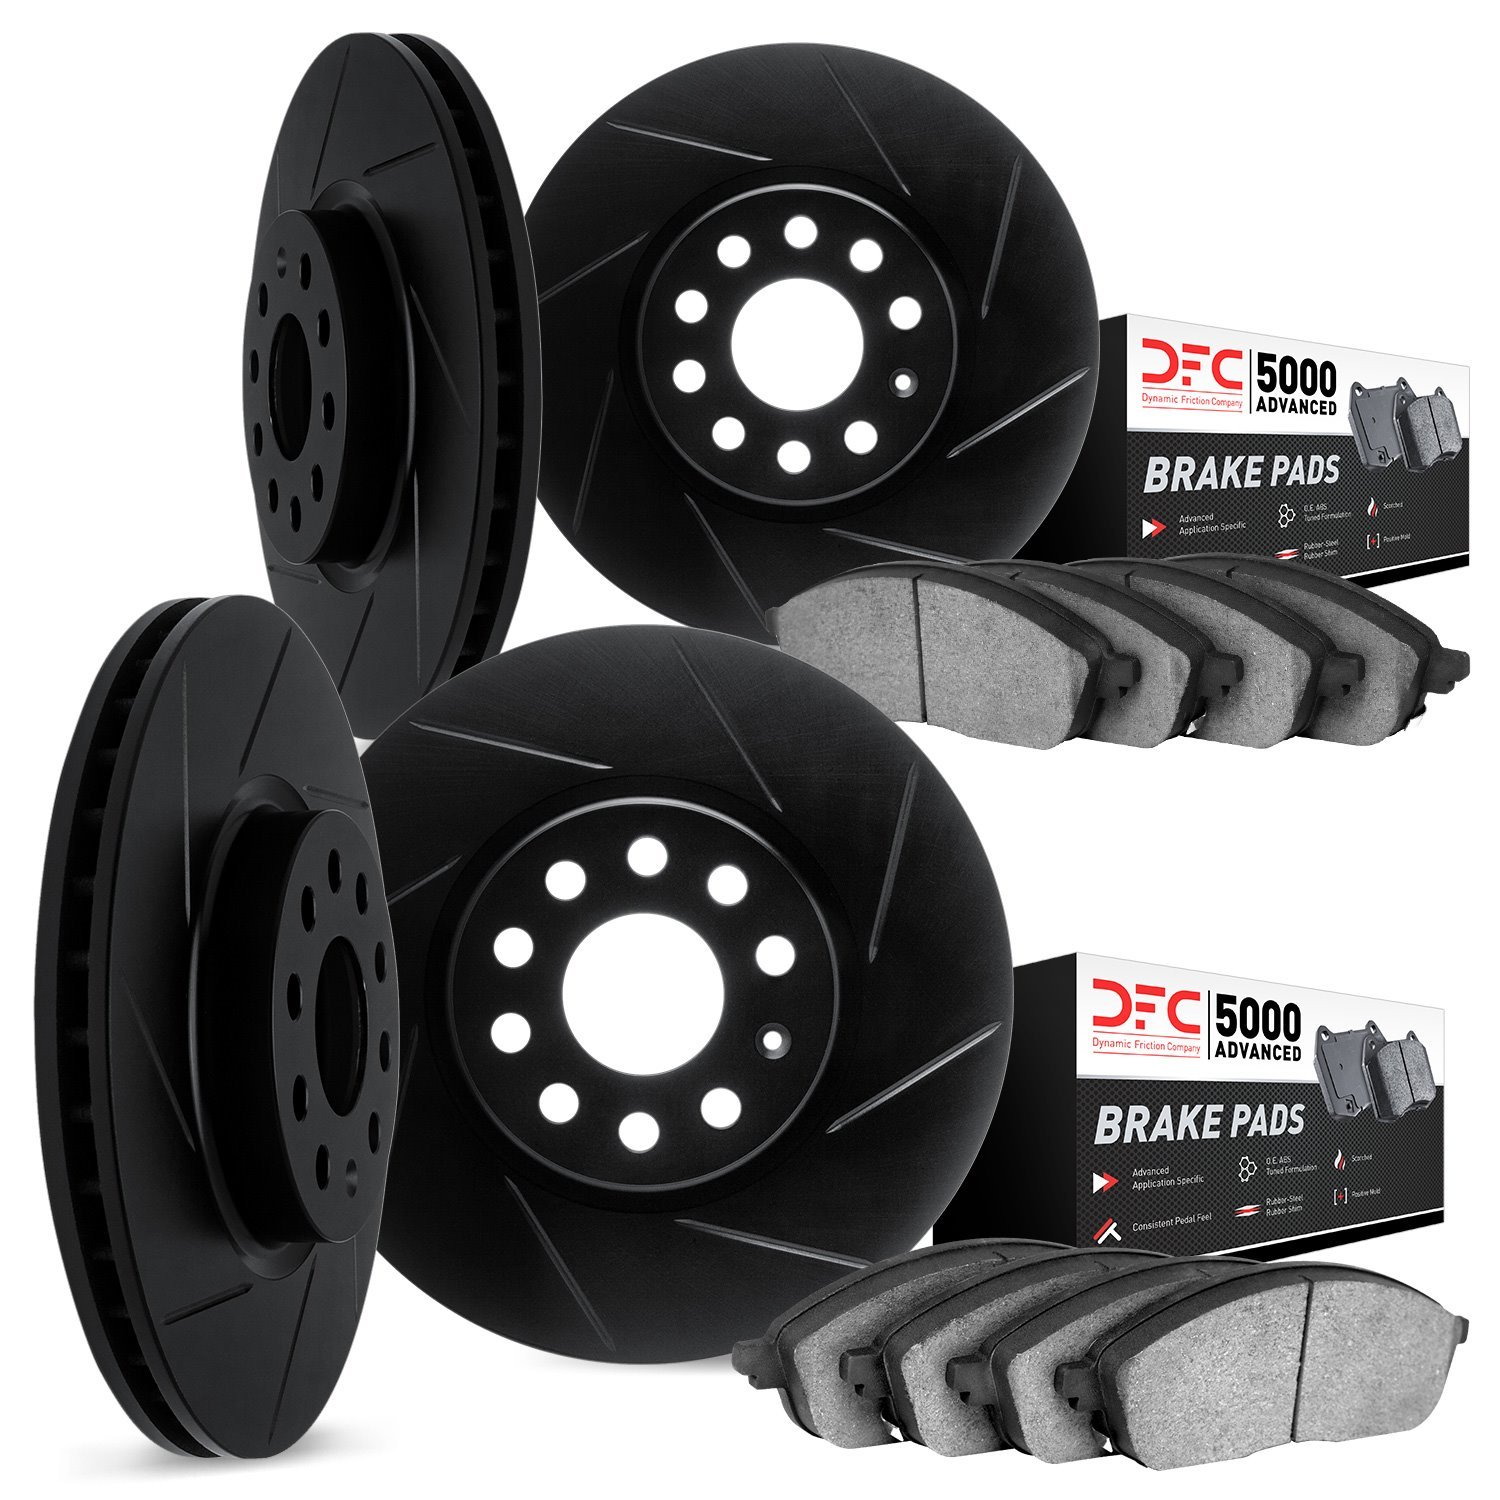 3514-67065 Slotted Brake Rotors w/5000 Advanced Brake Pads Kit & Hardware [Black], 2008-2015 Infiniti/Nissan, Position: Front an